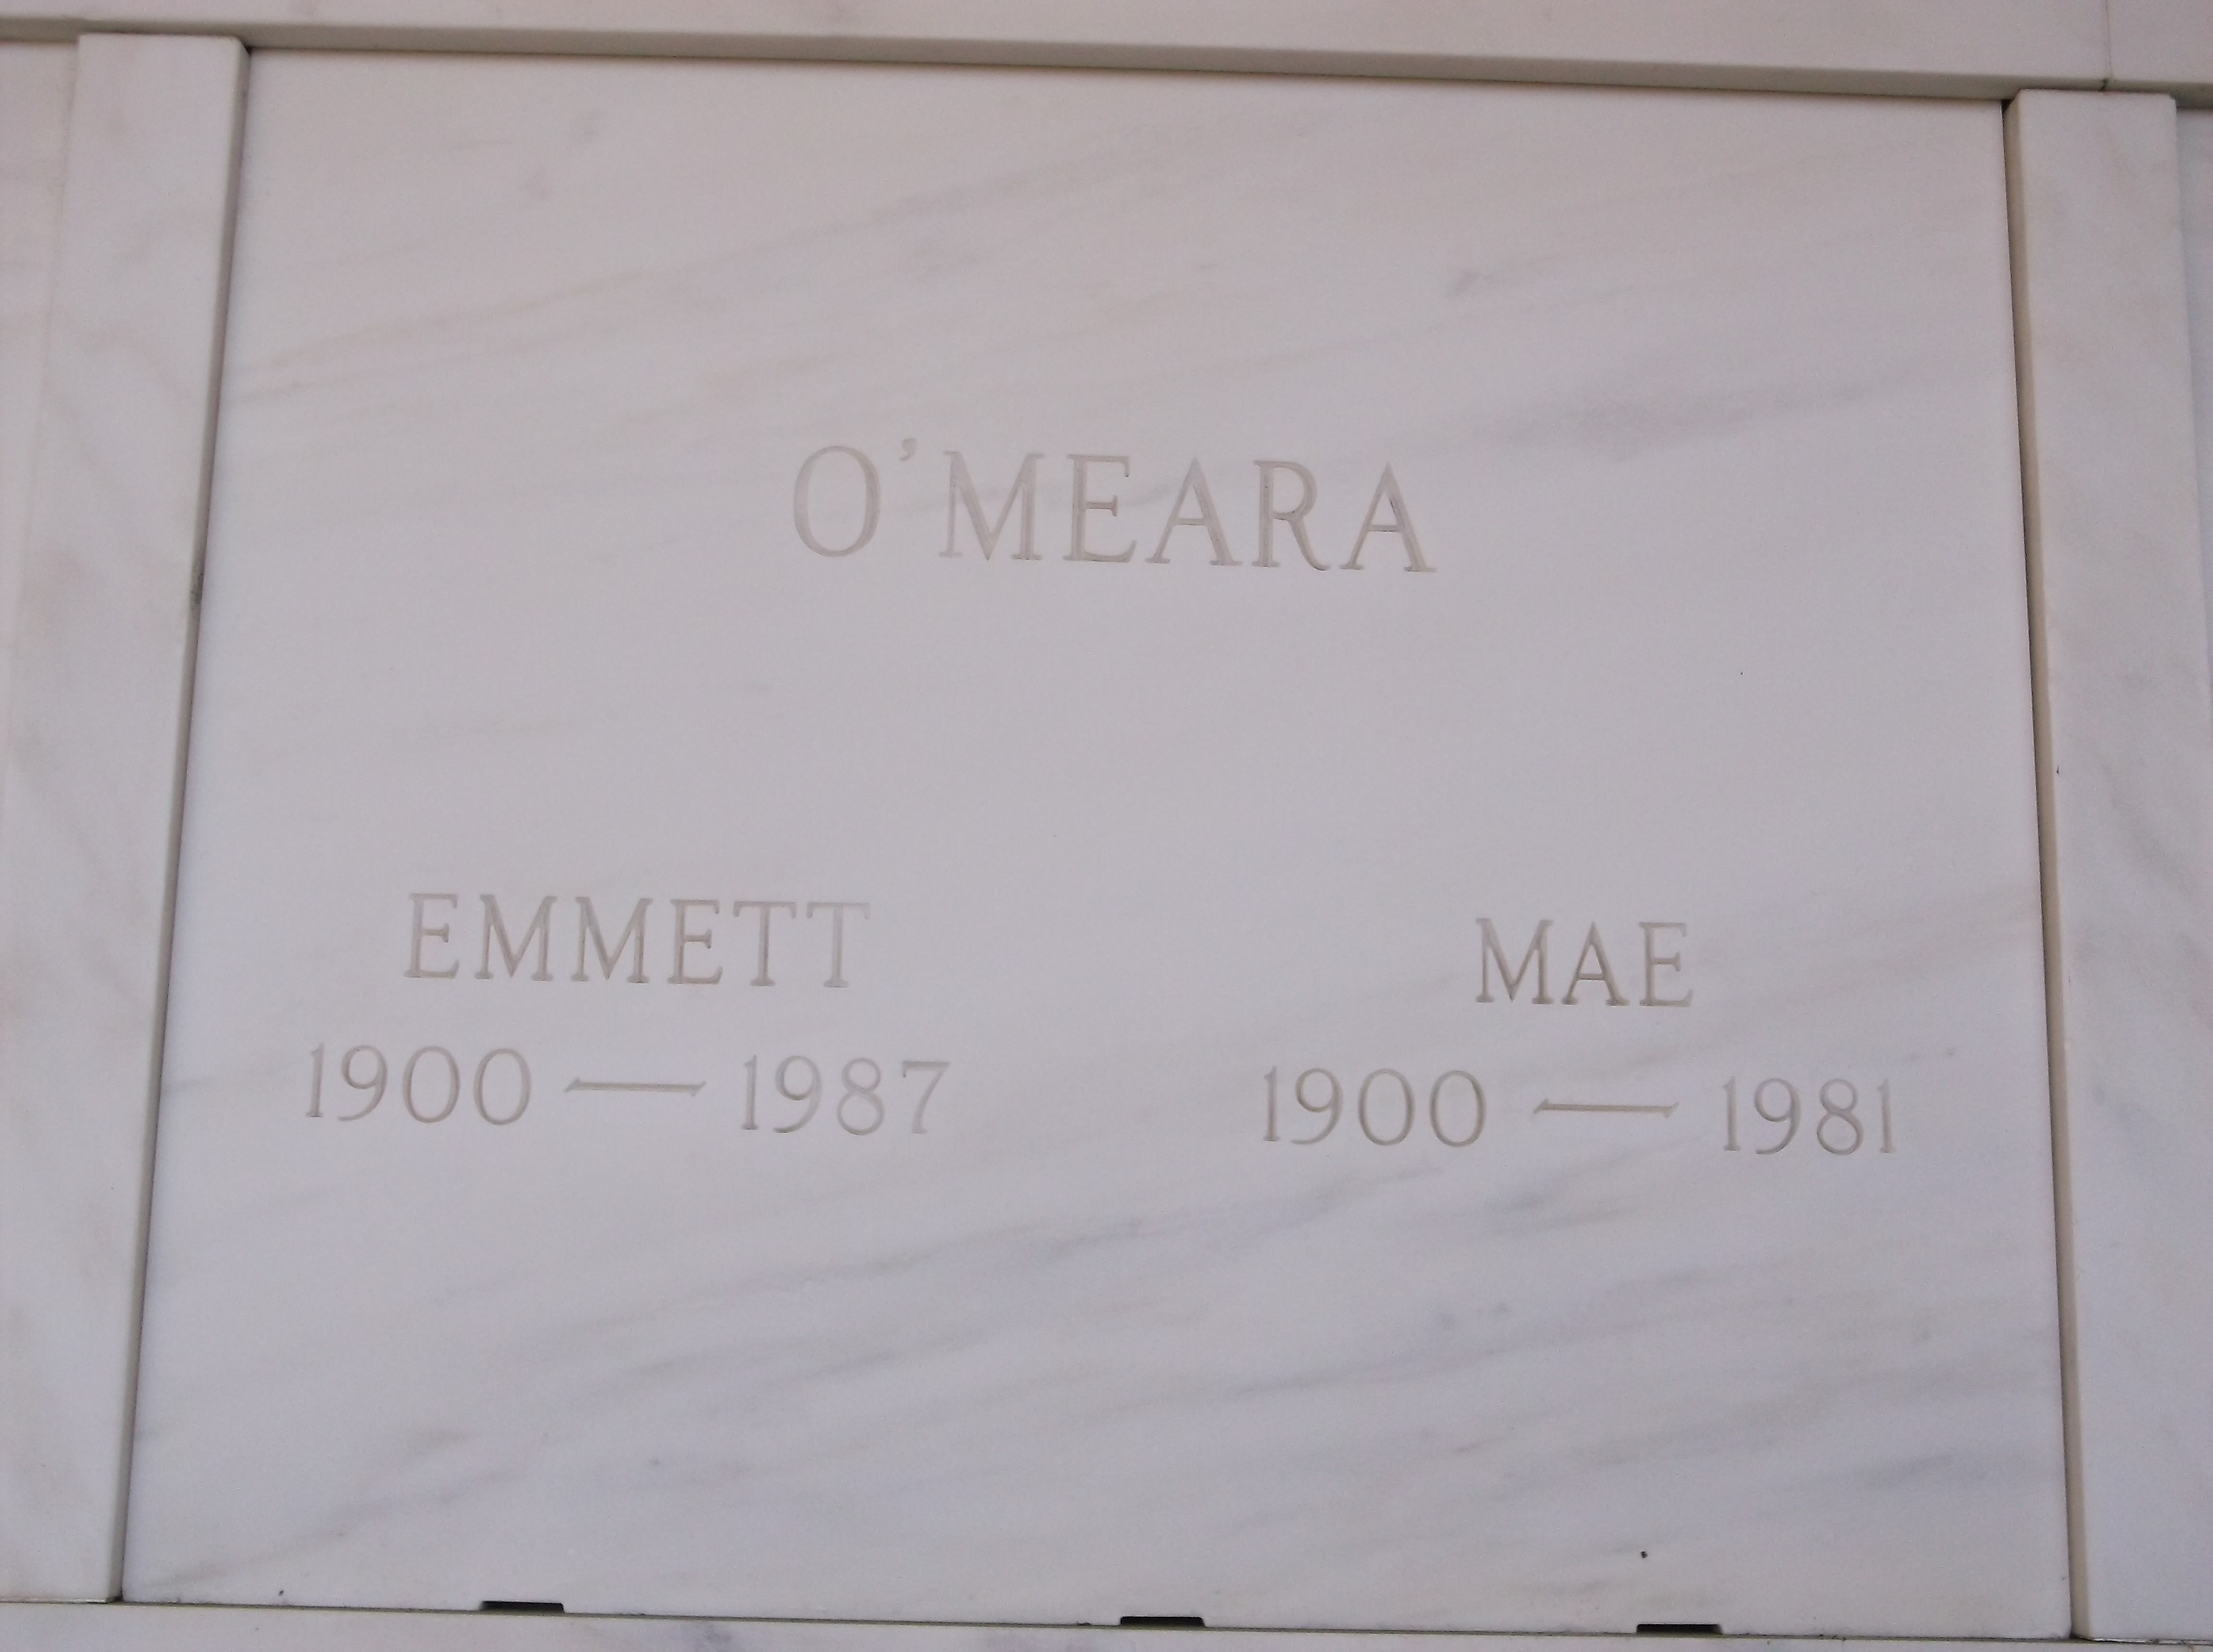 Emmett O'Meara